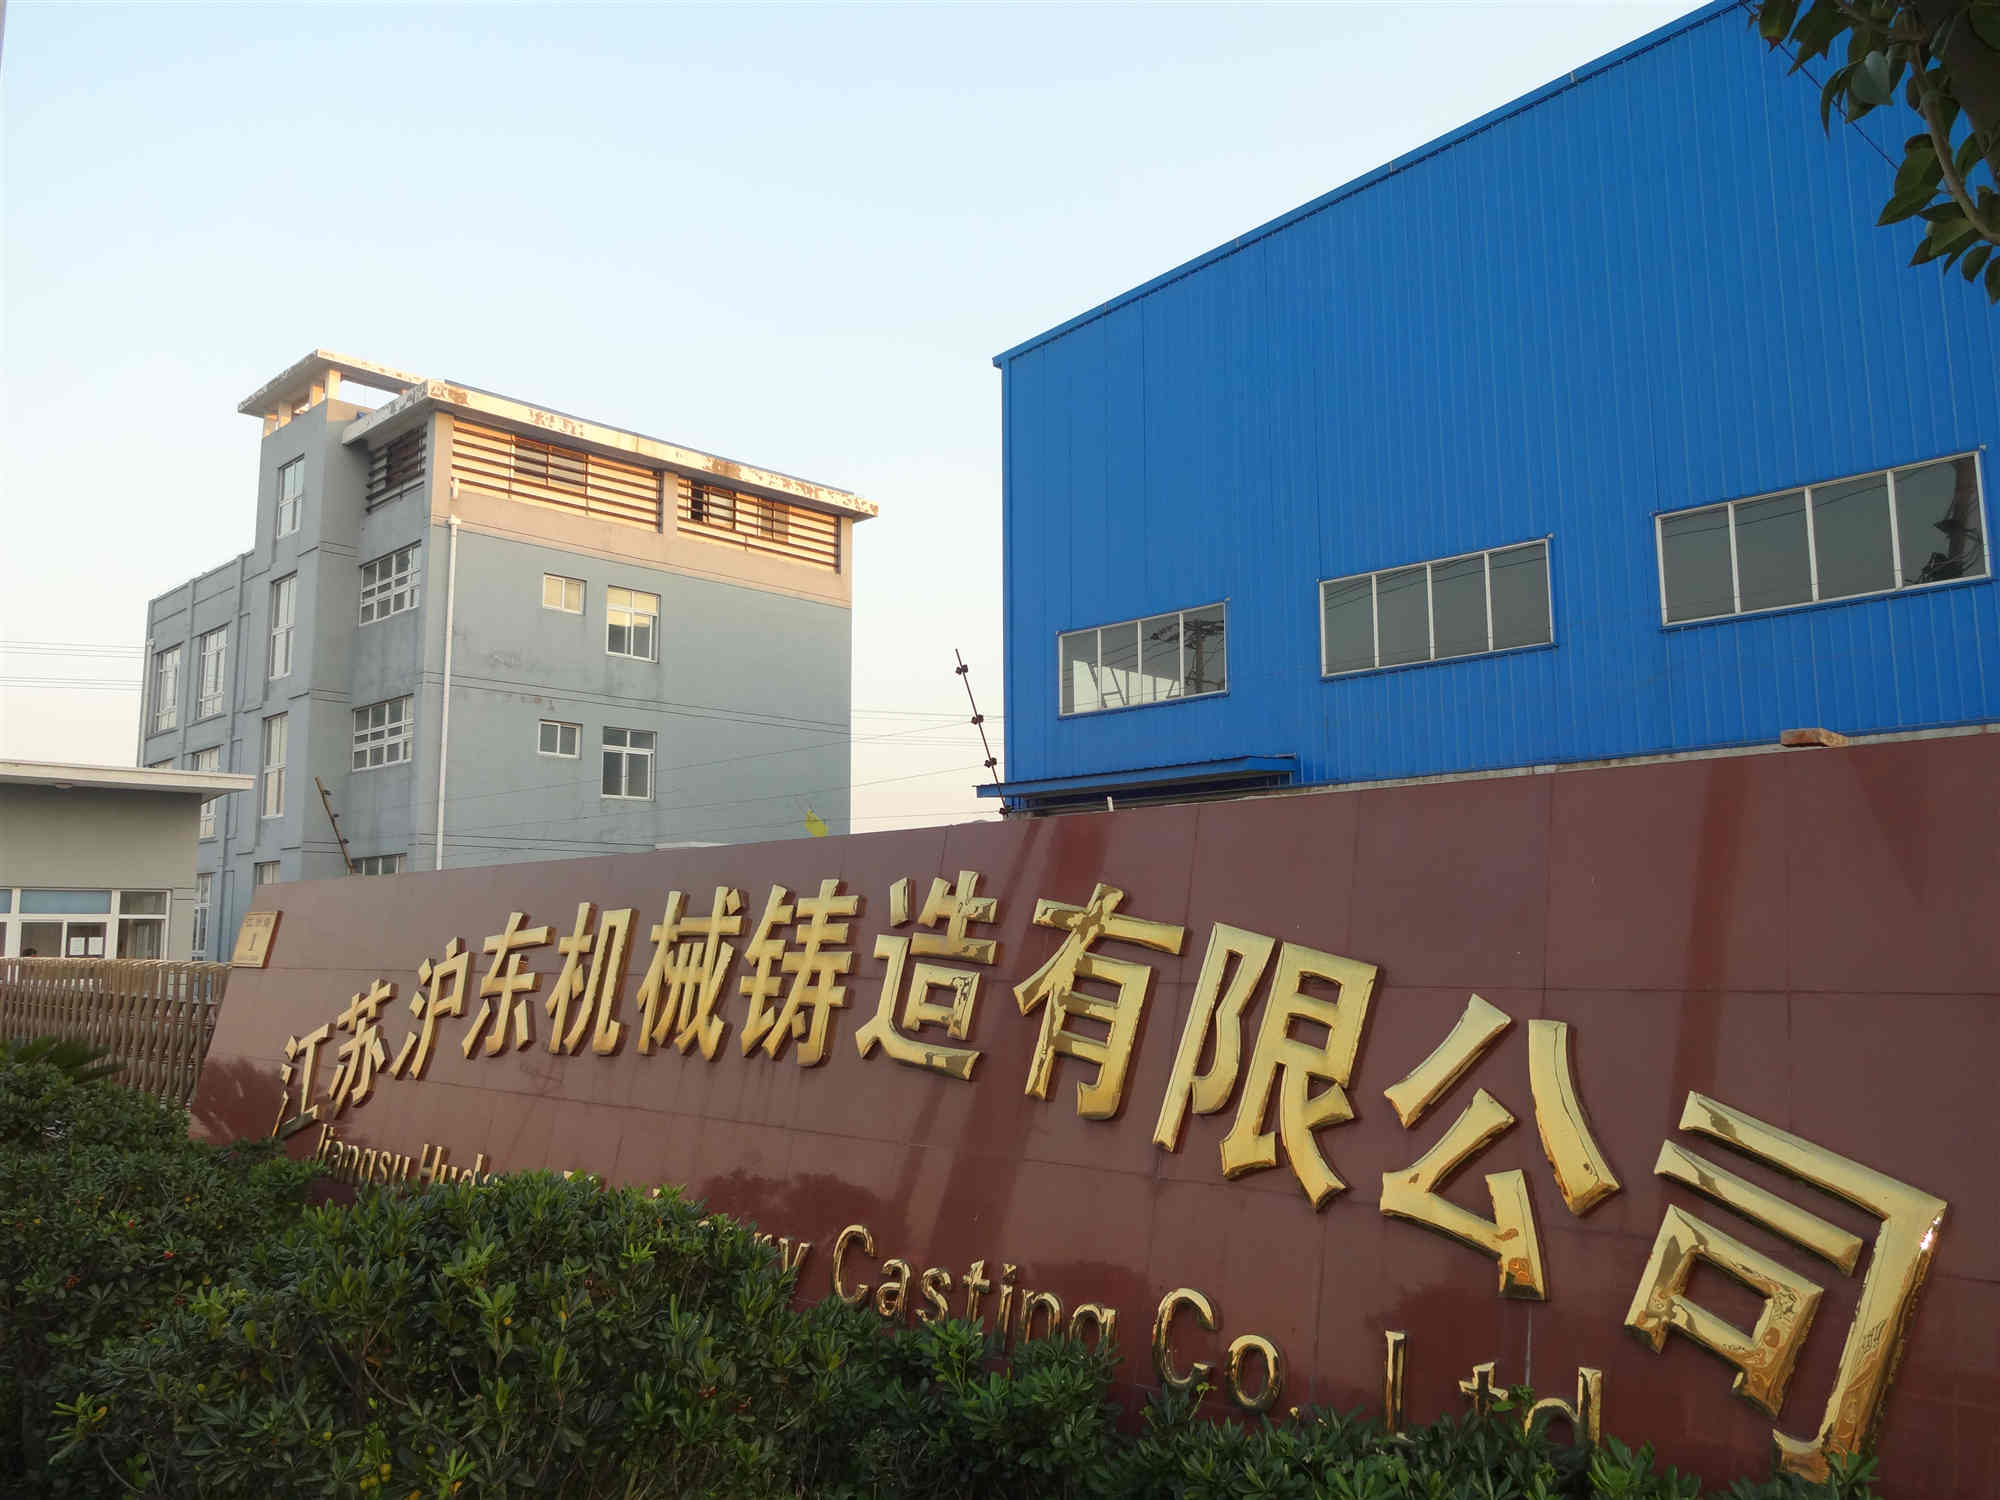 Jiangsu Hudong Machinery Casting 2019 started!